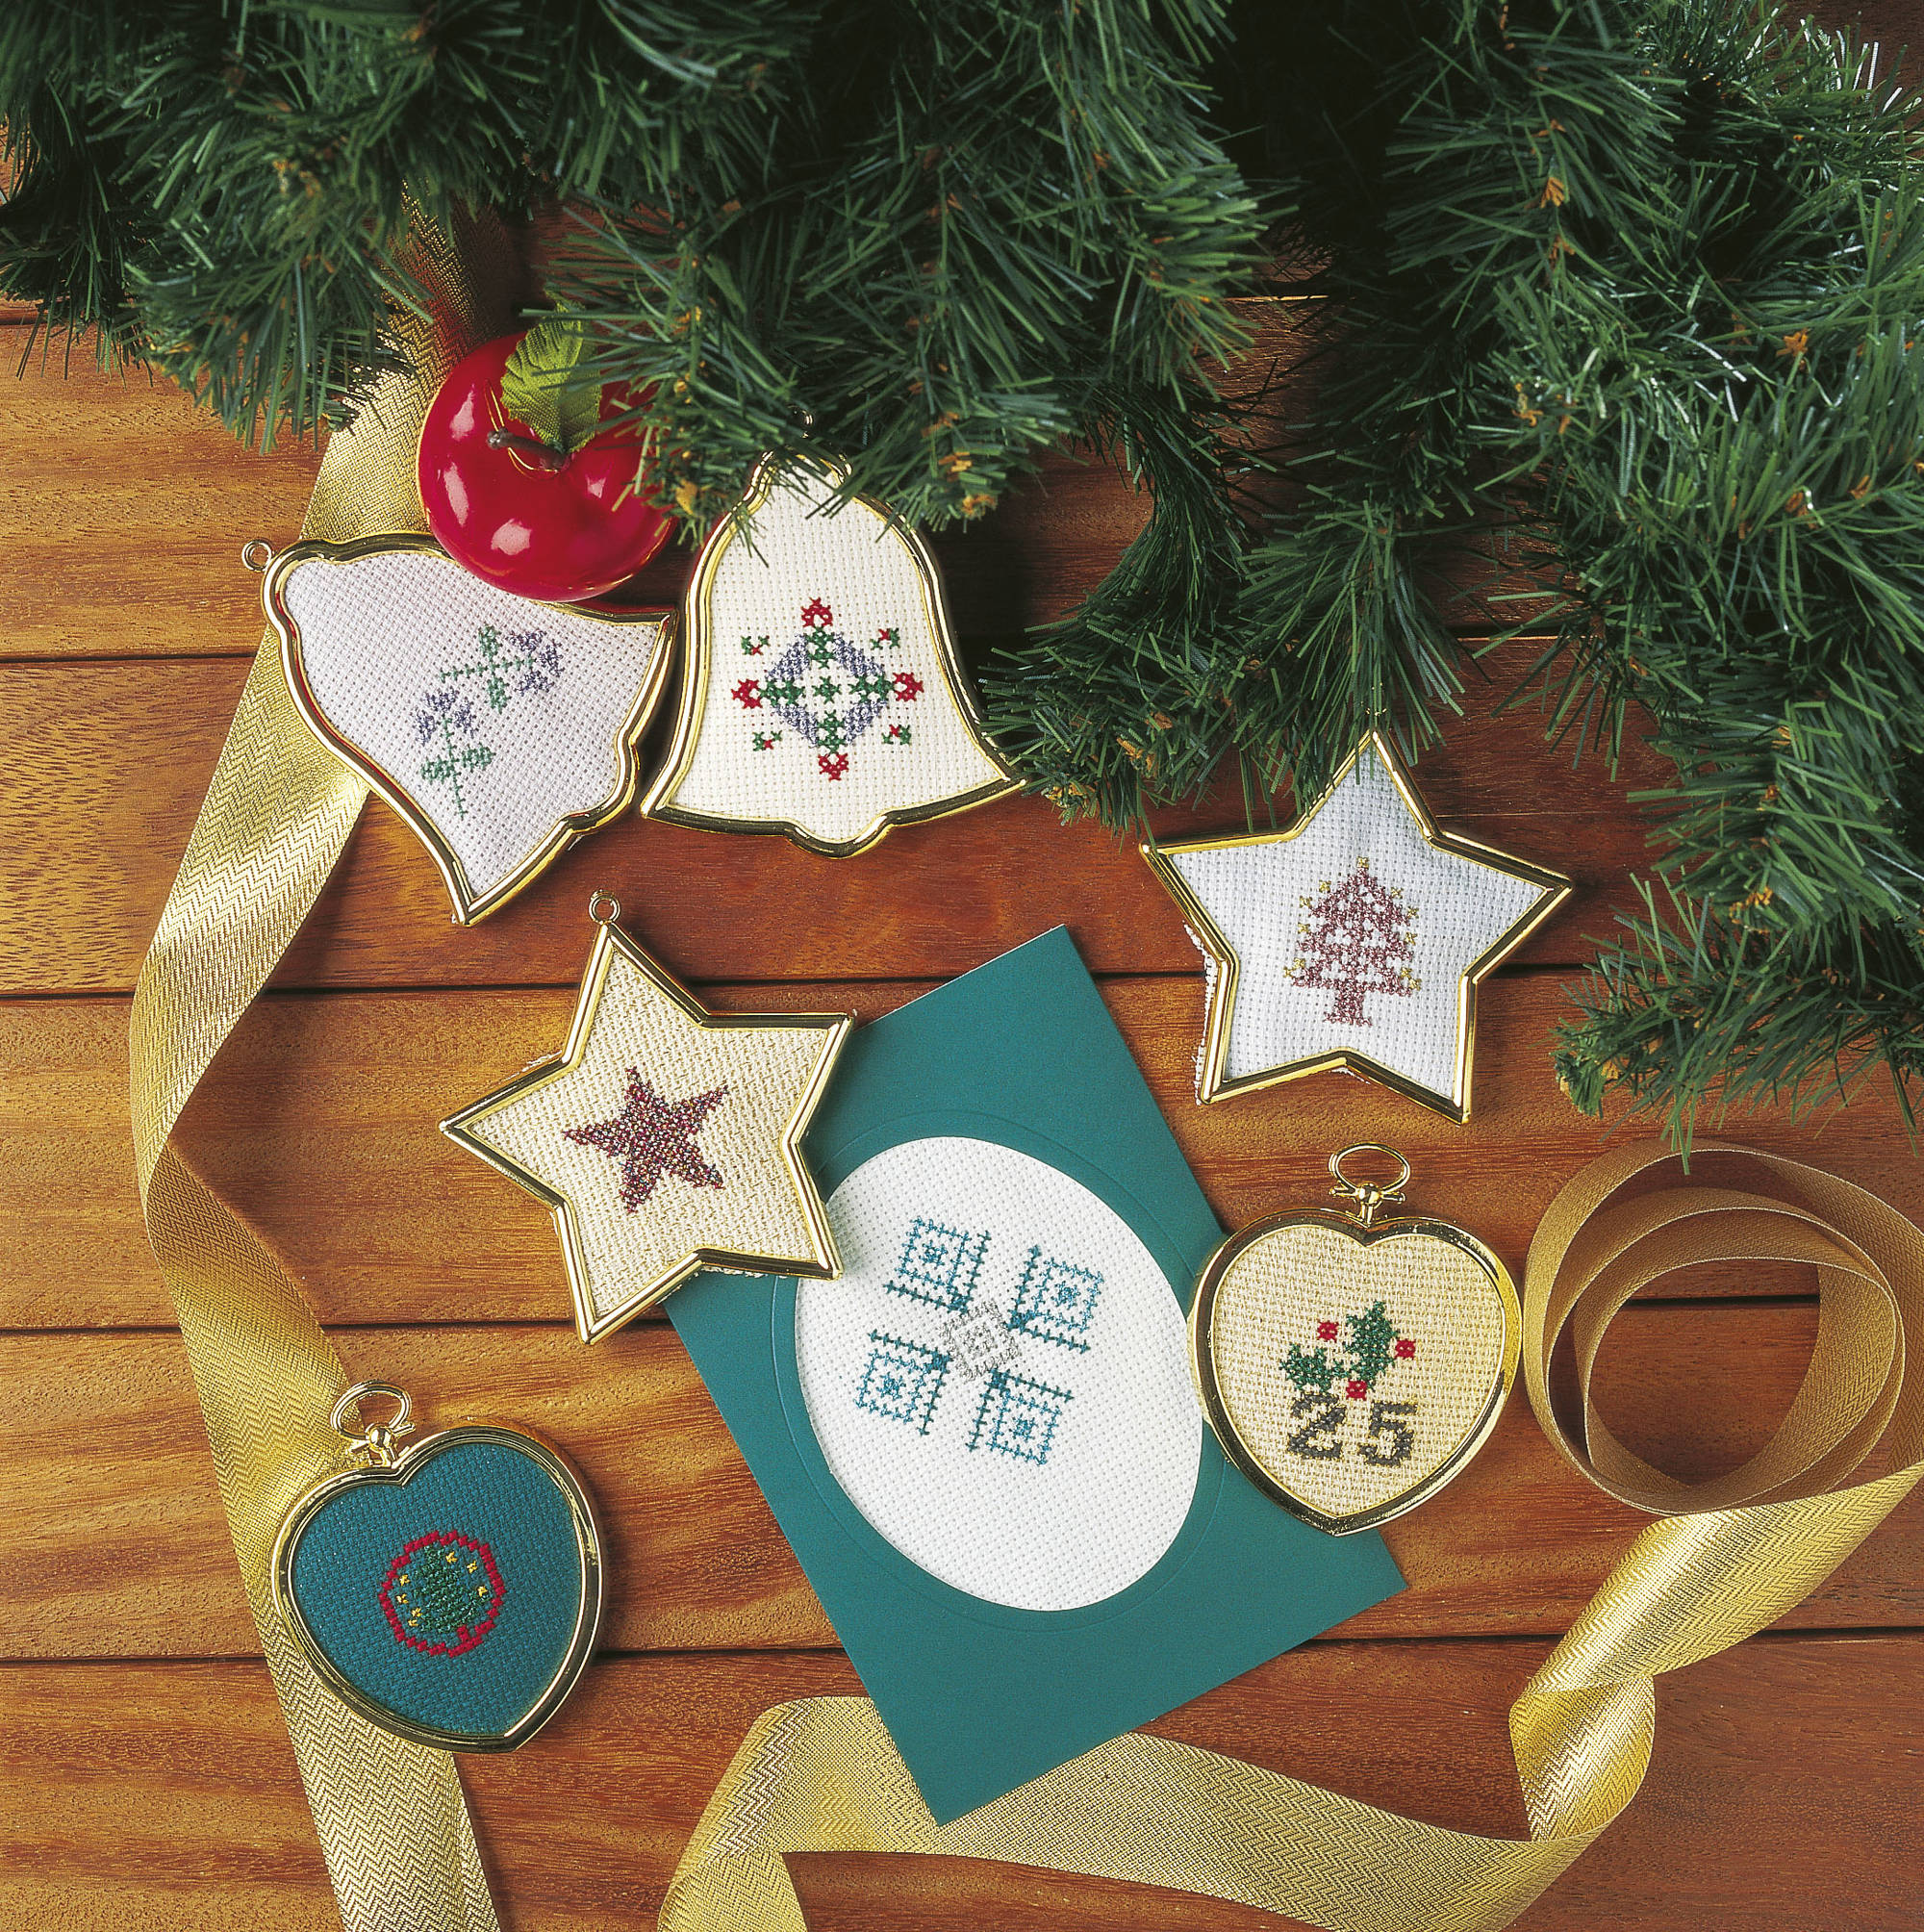 Tarjeta navideña con adorno bordado con punto de cruz.